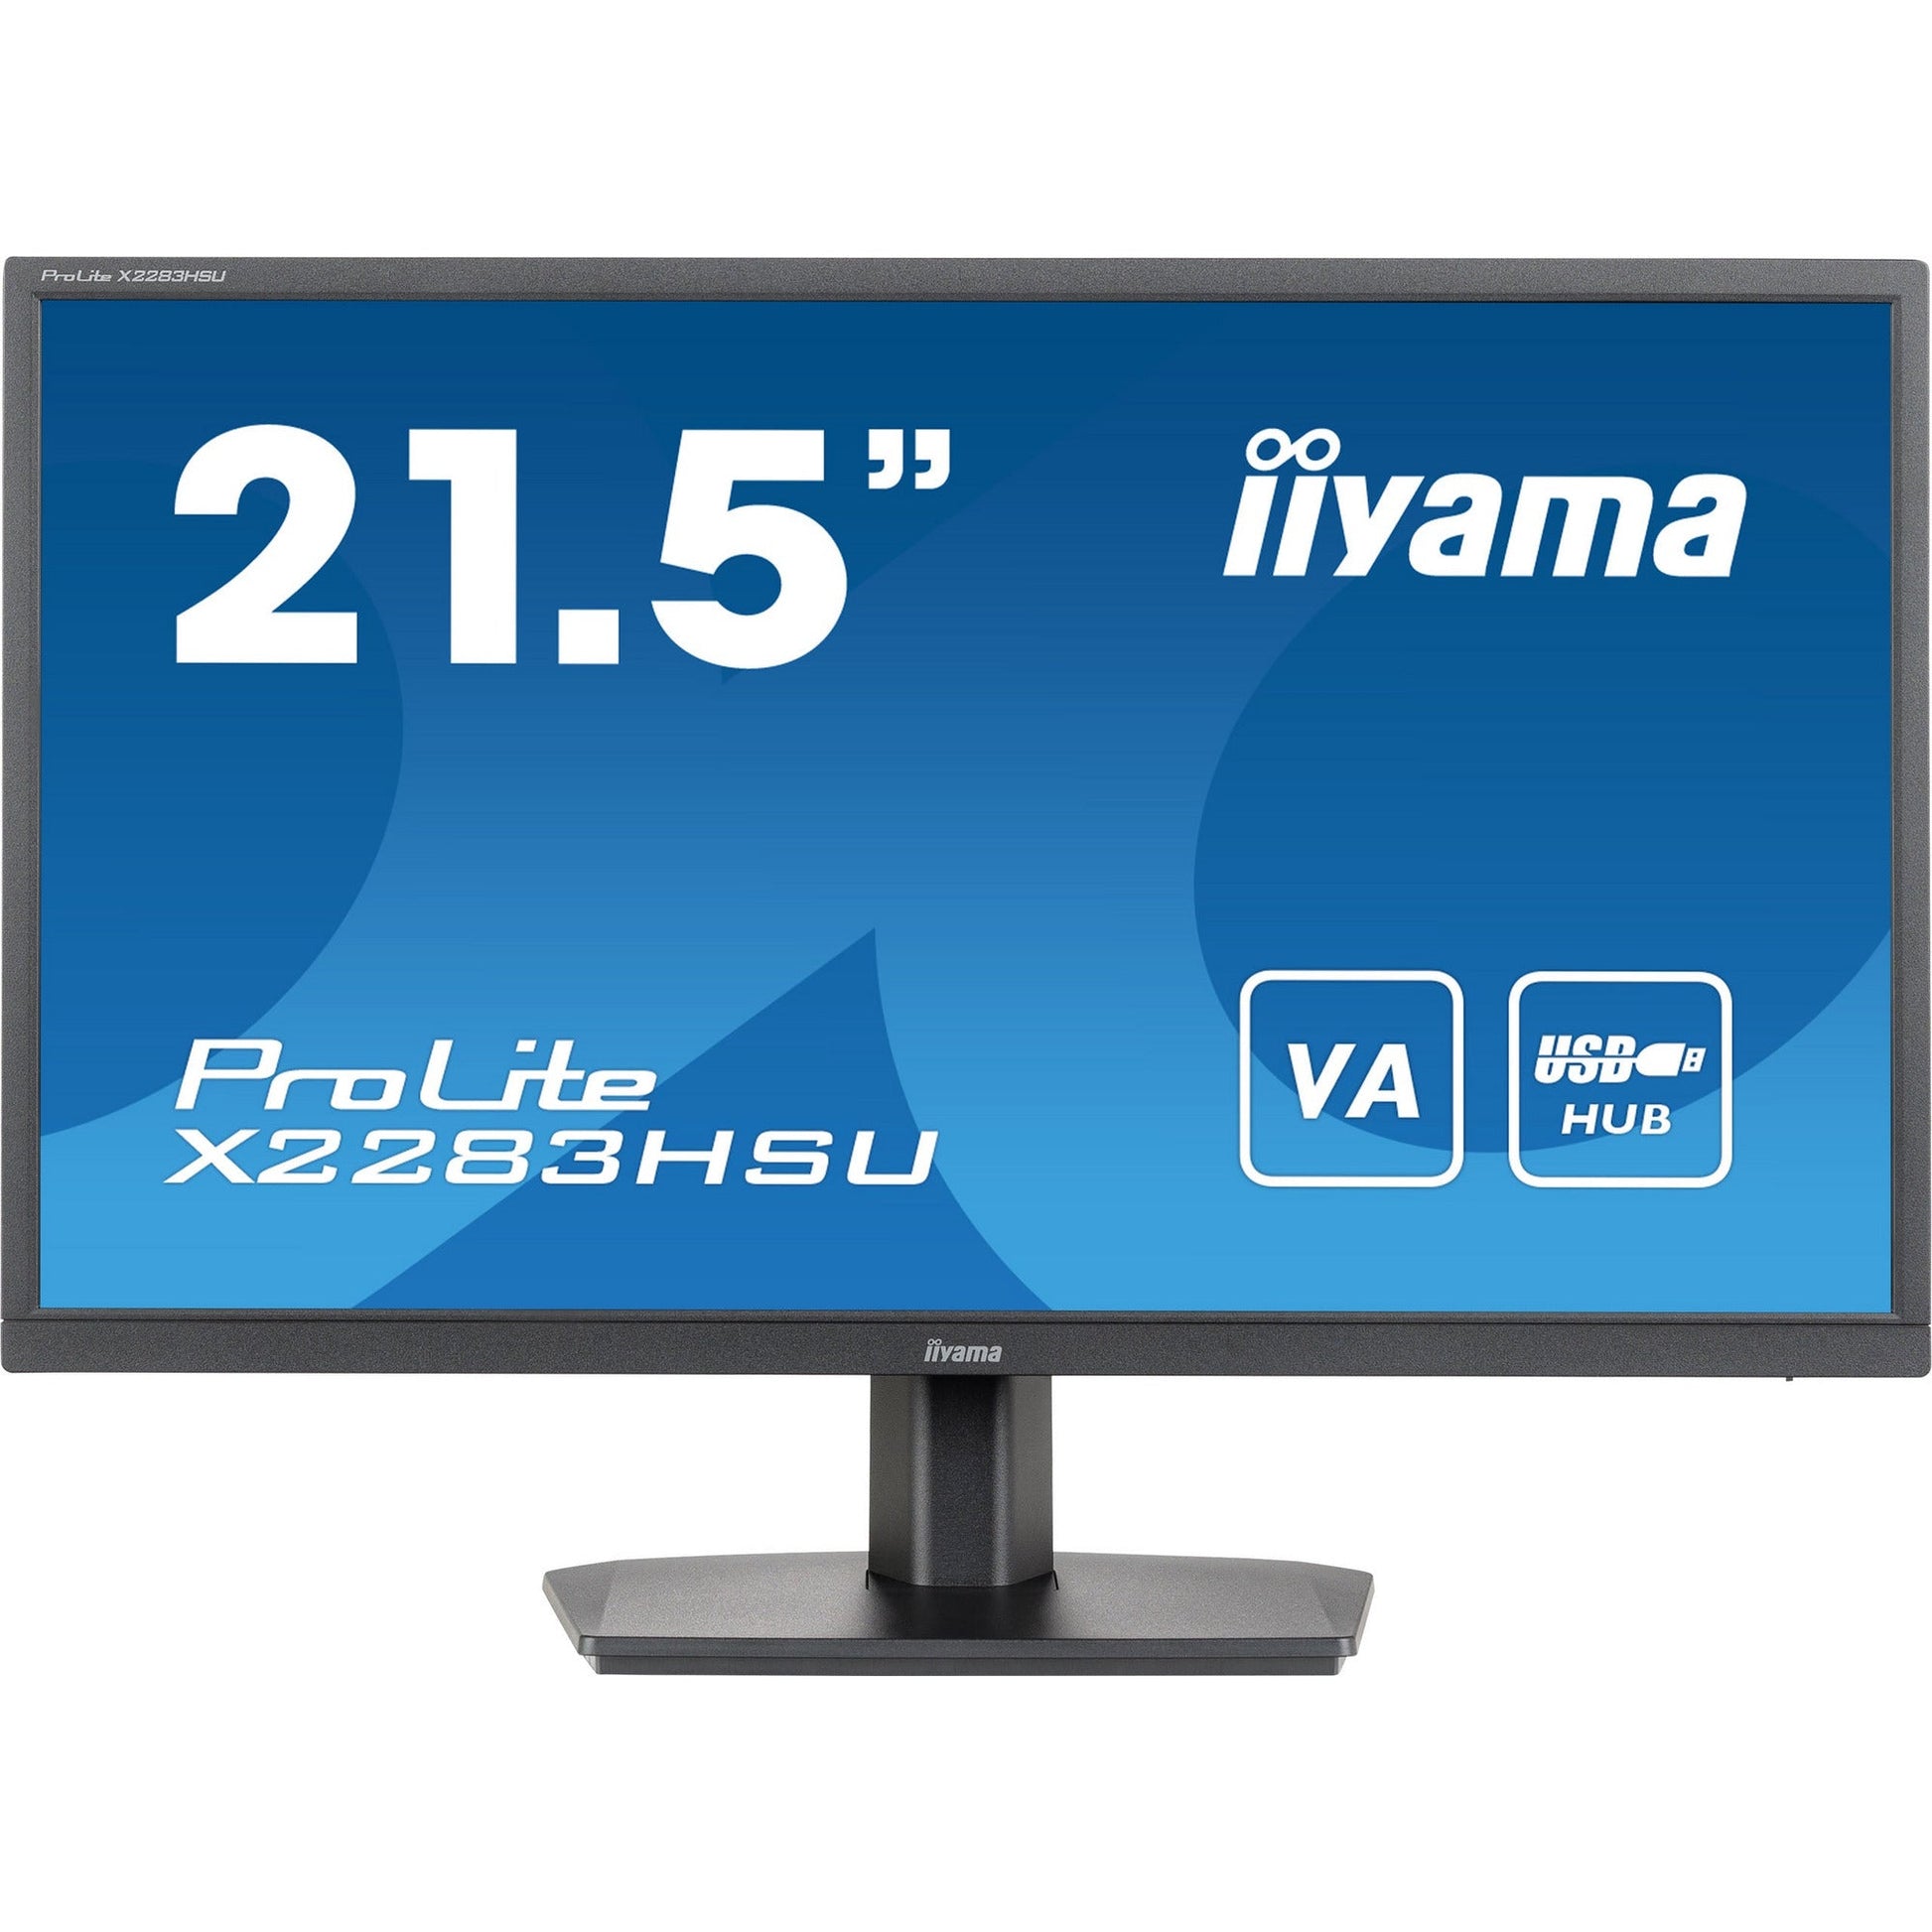 Steel Blue iiyama ProLite X2283HSU-B1 21.5" VA Monitor with Fixed Stand